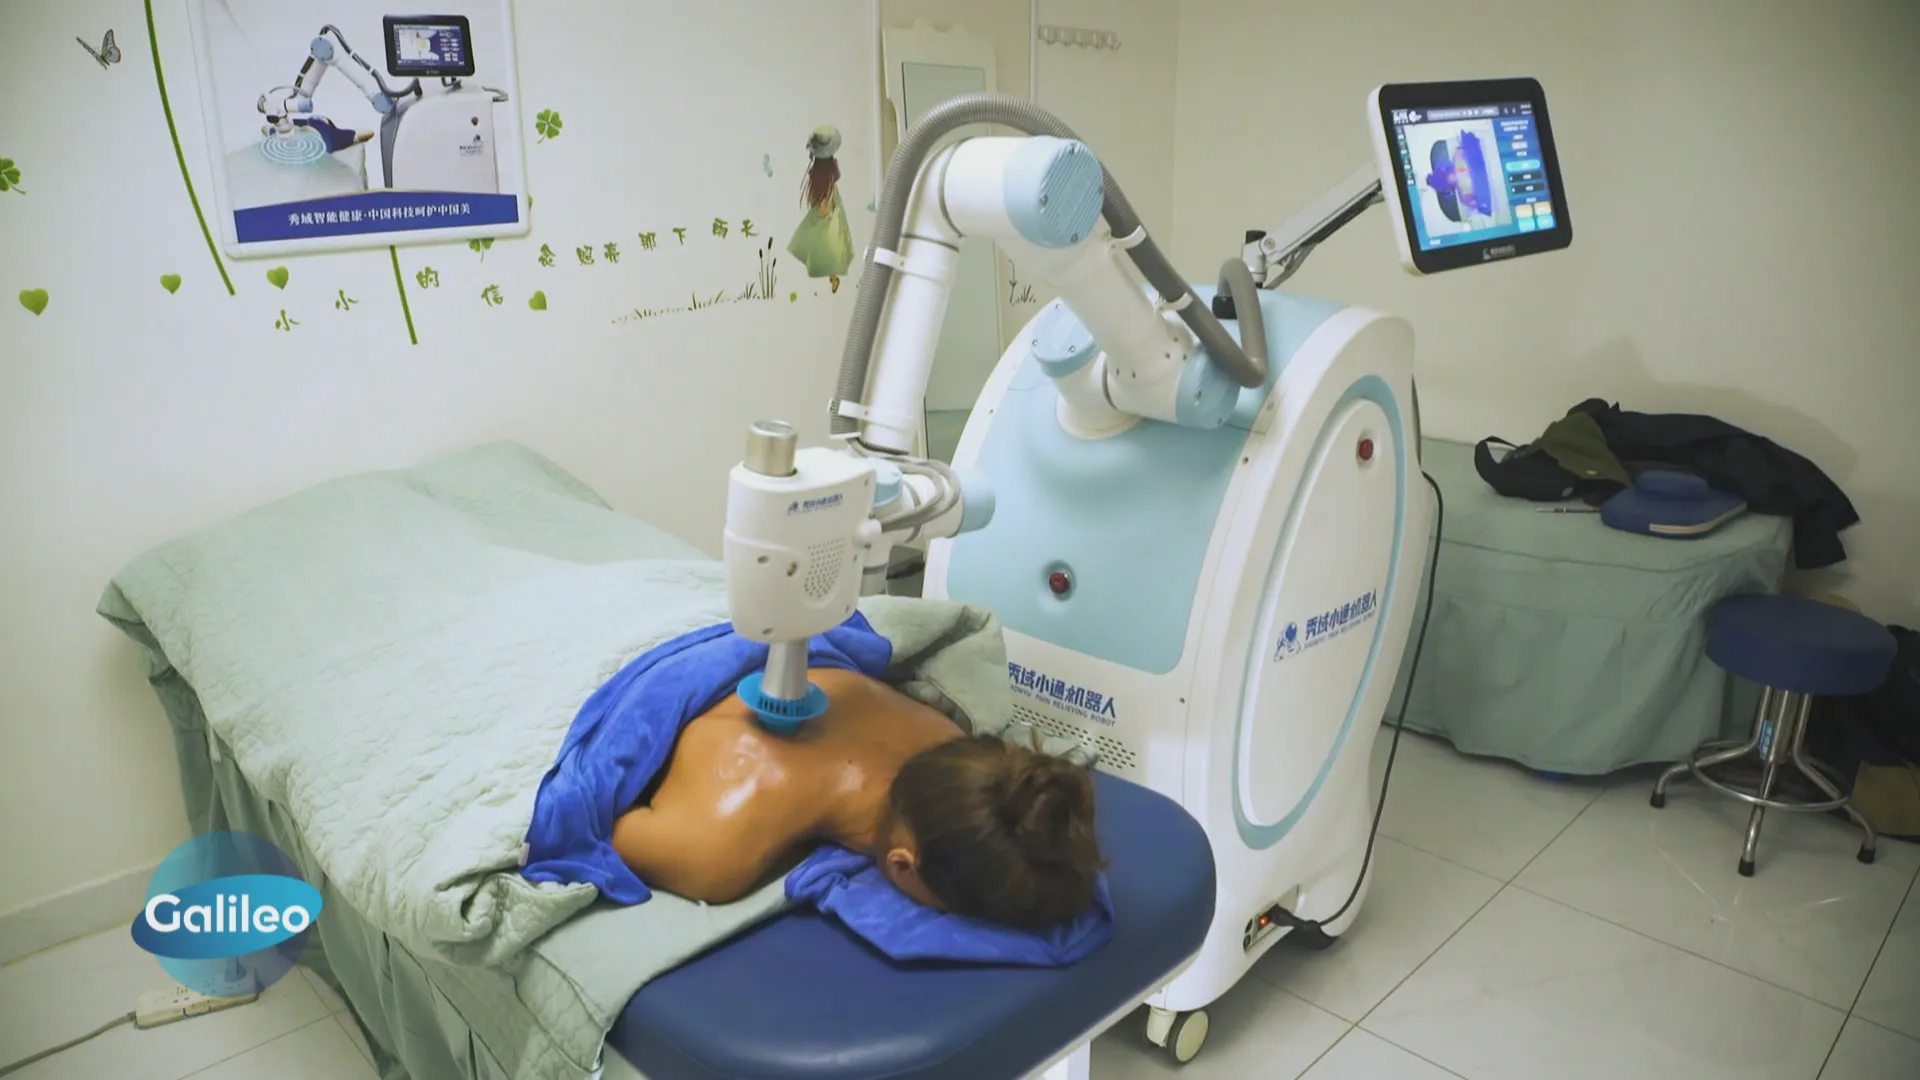 Cobot-Massage-Zentren: Massieren Roboter besser als Menschen?